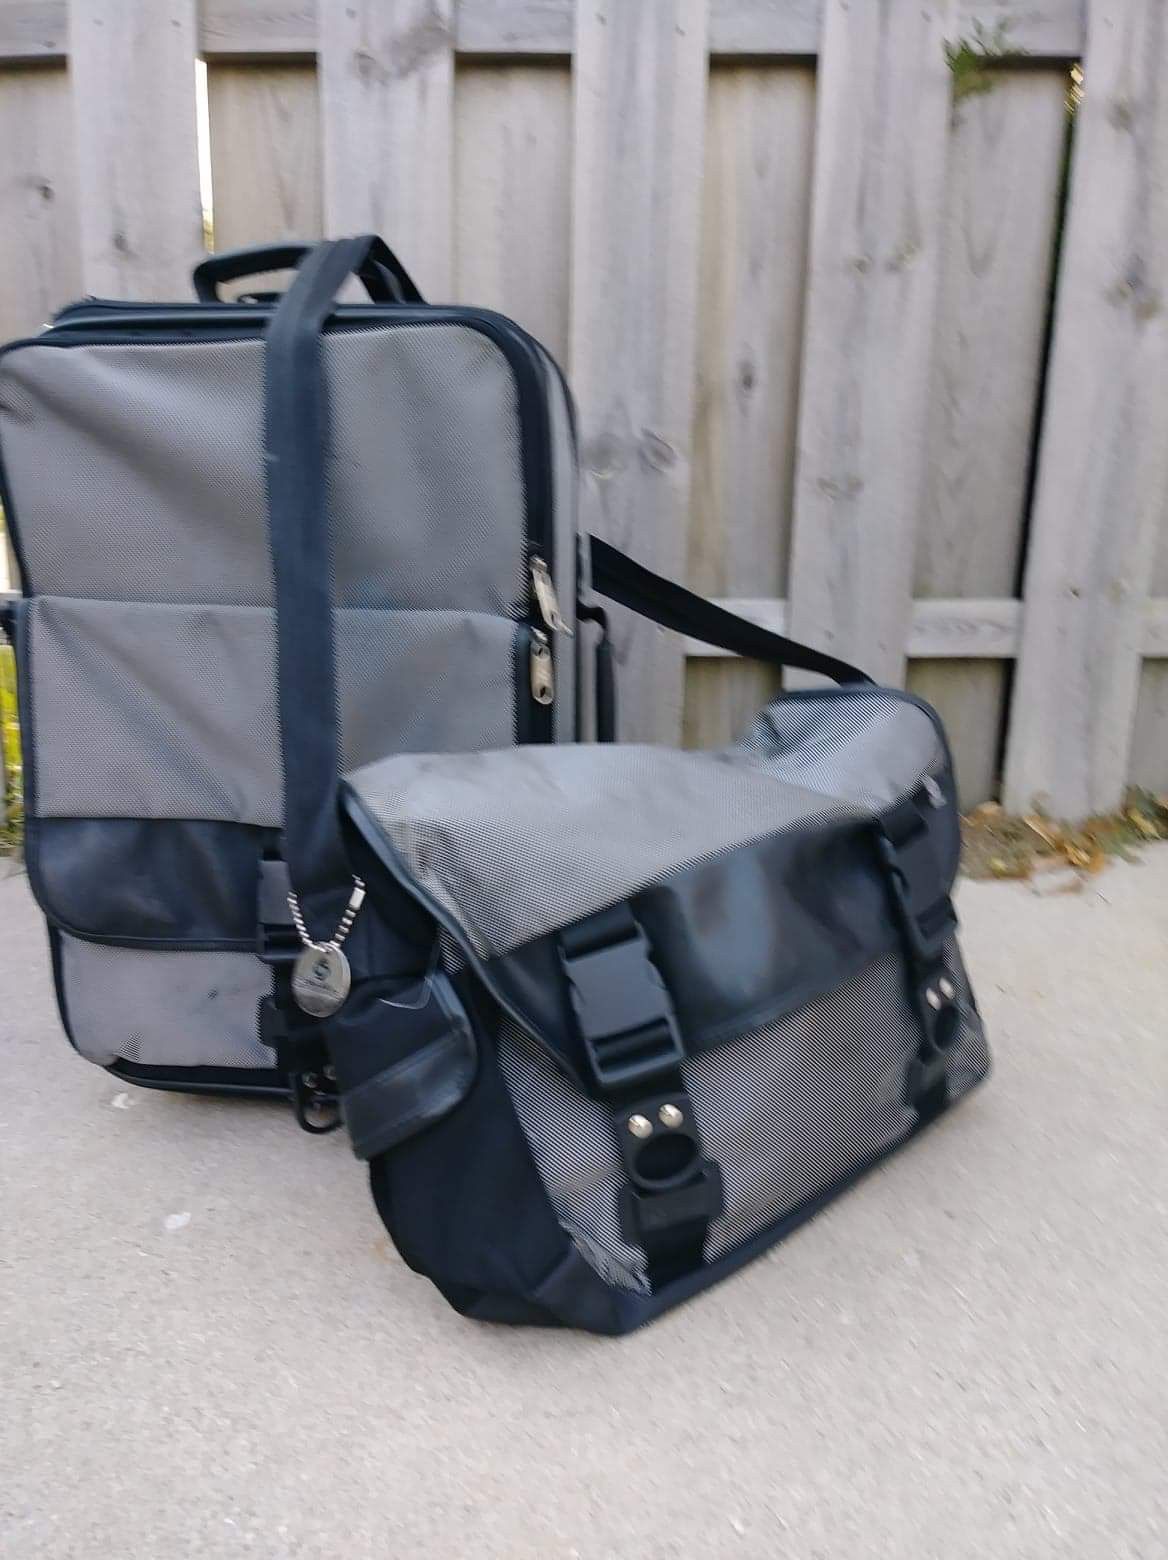 Samsonite gray/ platinum and black wheel handled carry on bag and over-the-shoulder messenger bag.